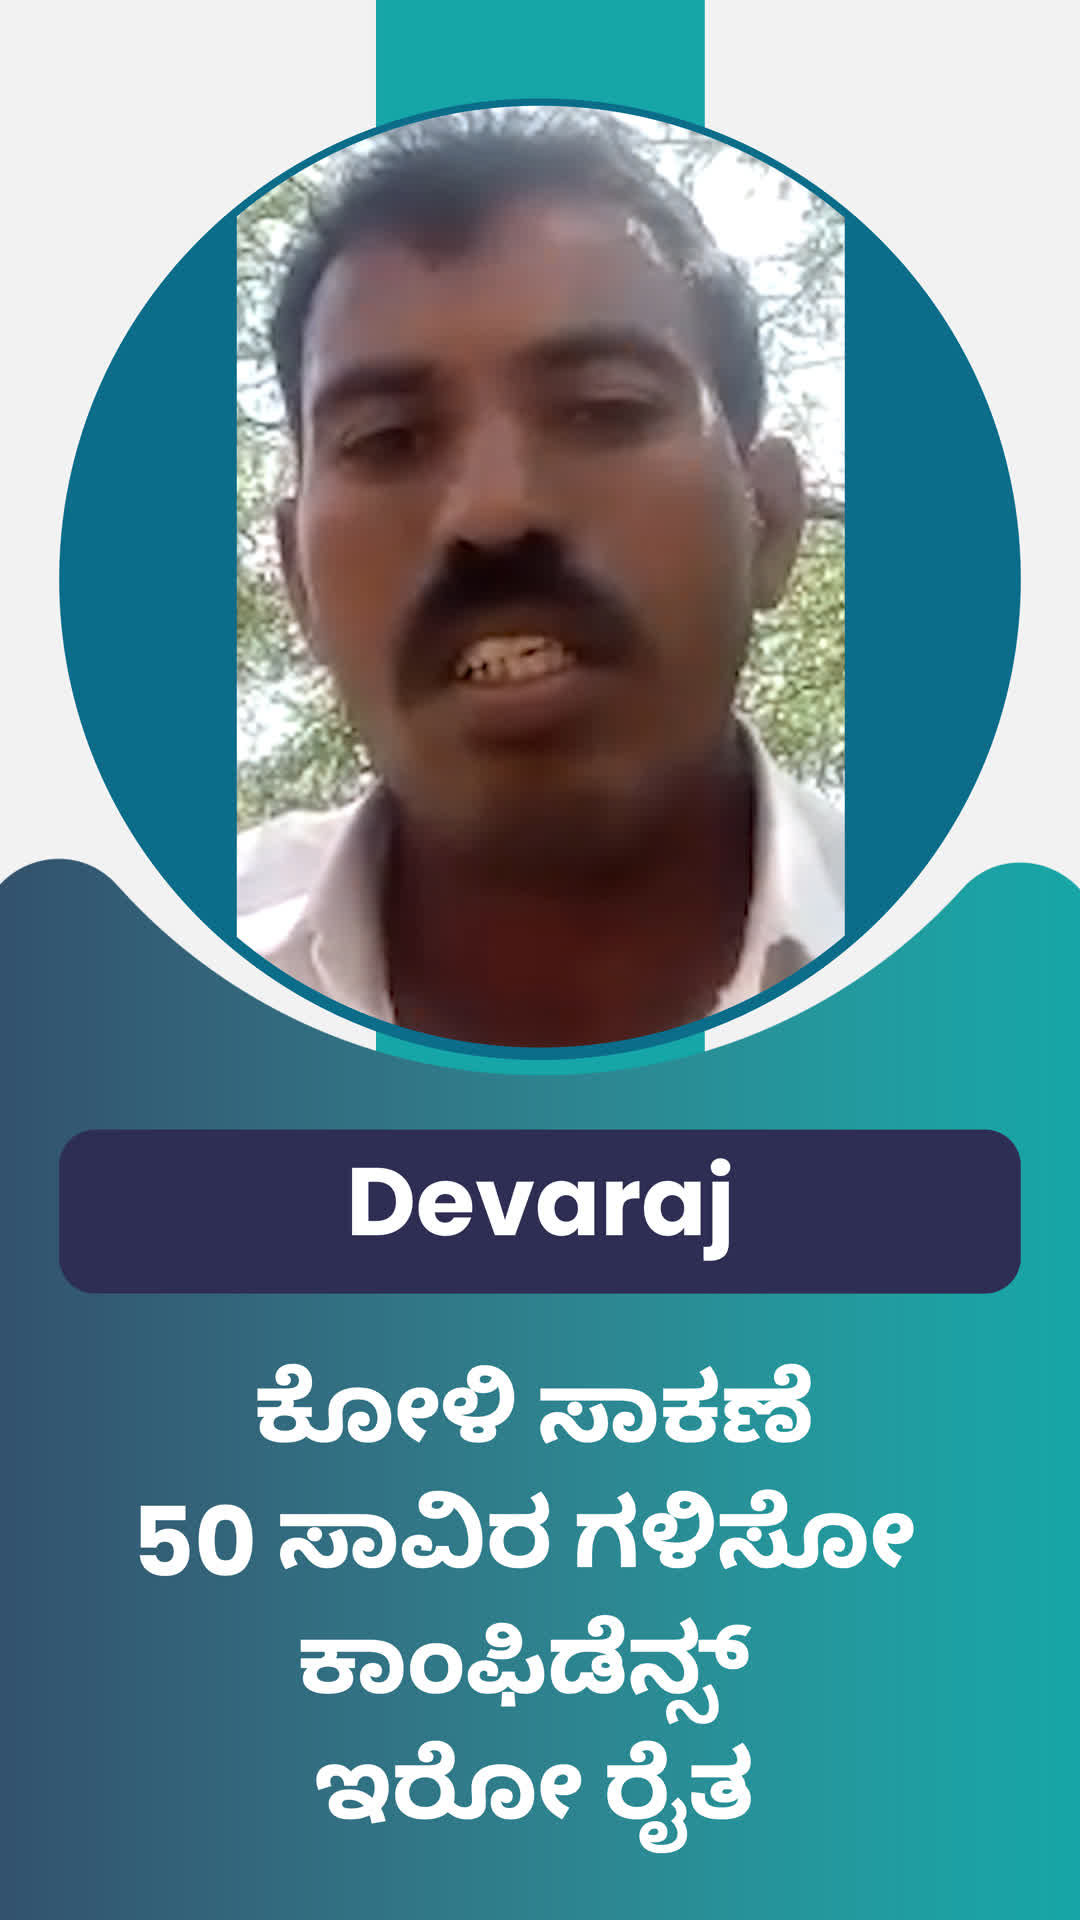 Devaraja's Honest Review of ffreedom app - Ballari ,Karnataka